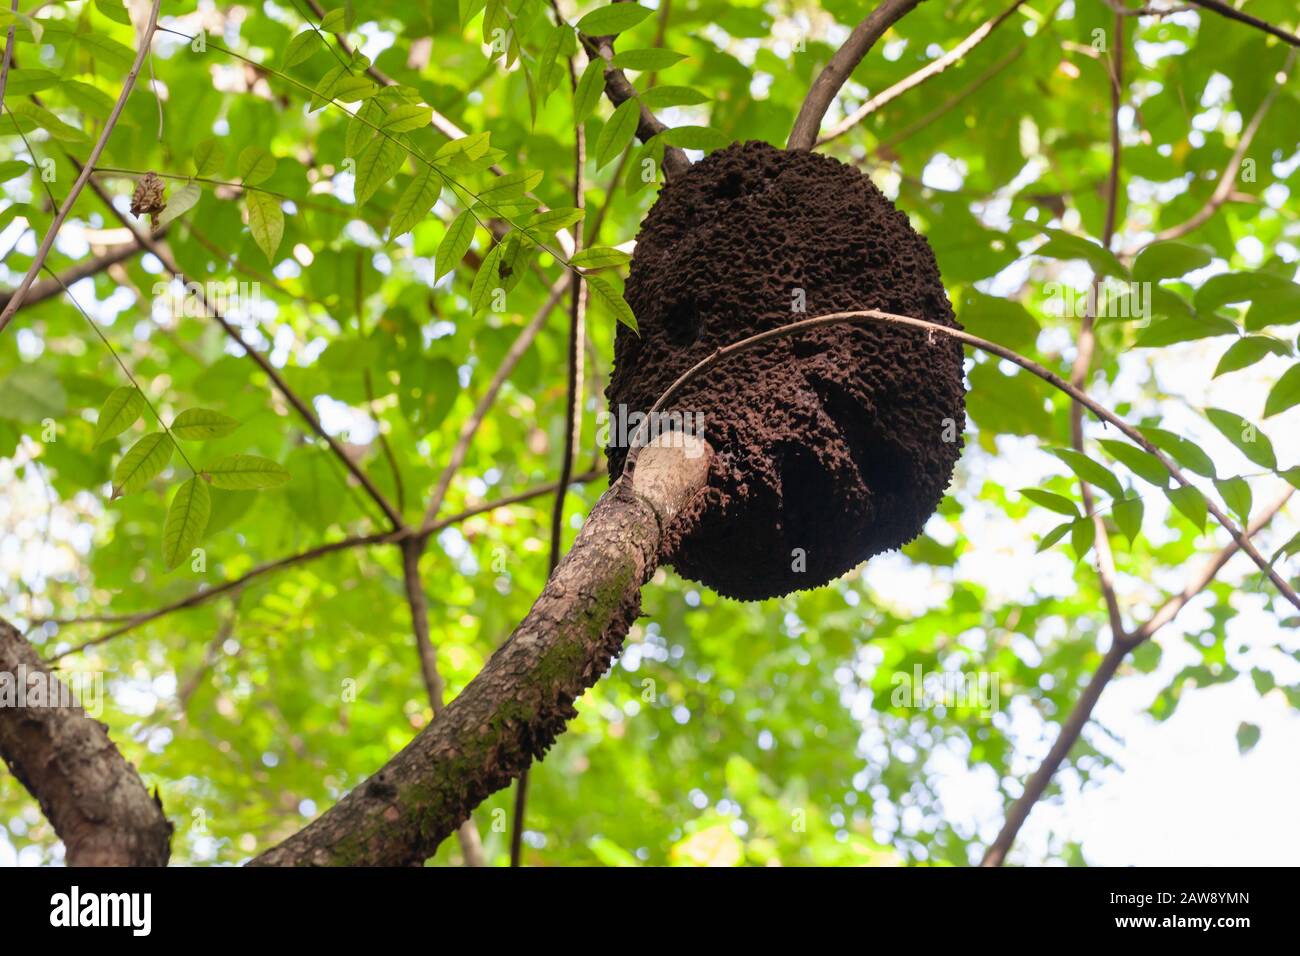 An arboreal termite nest, Dominican Republic nature Stock Photo